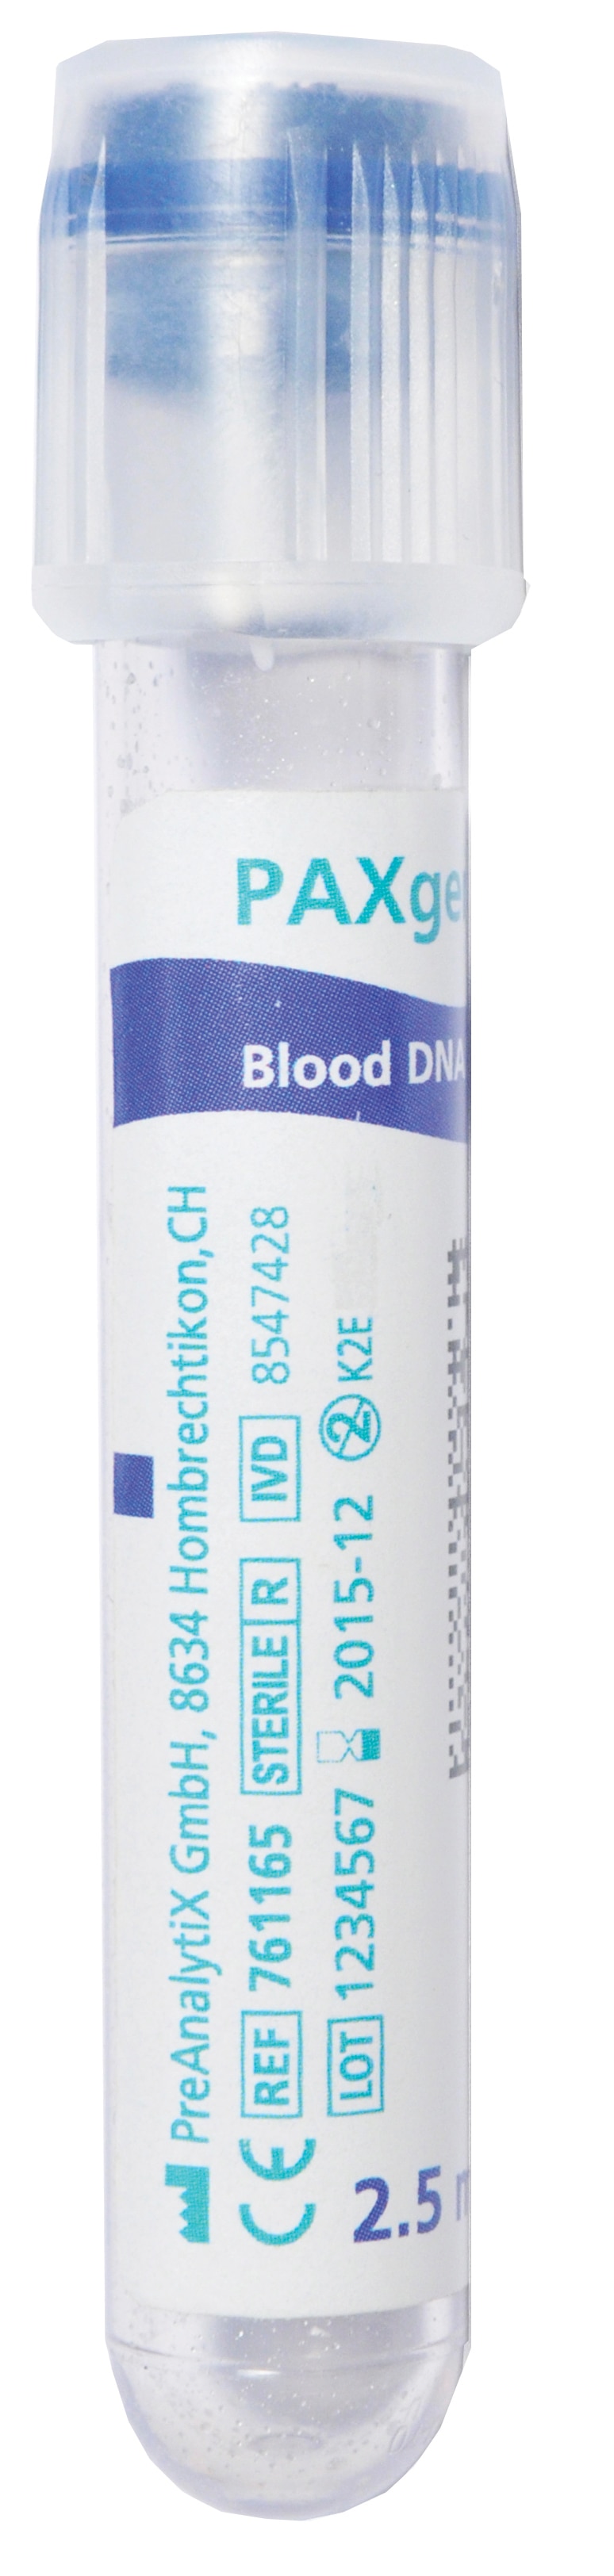 Paxgene Blood Dna Tube 761165 Bd